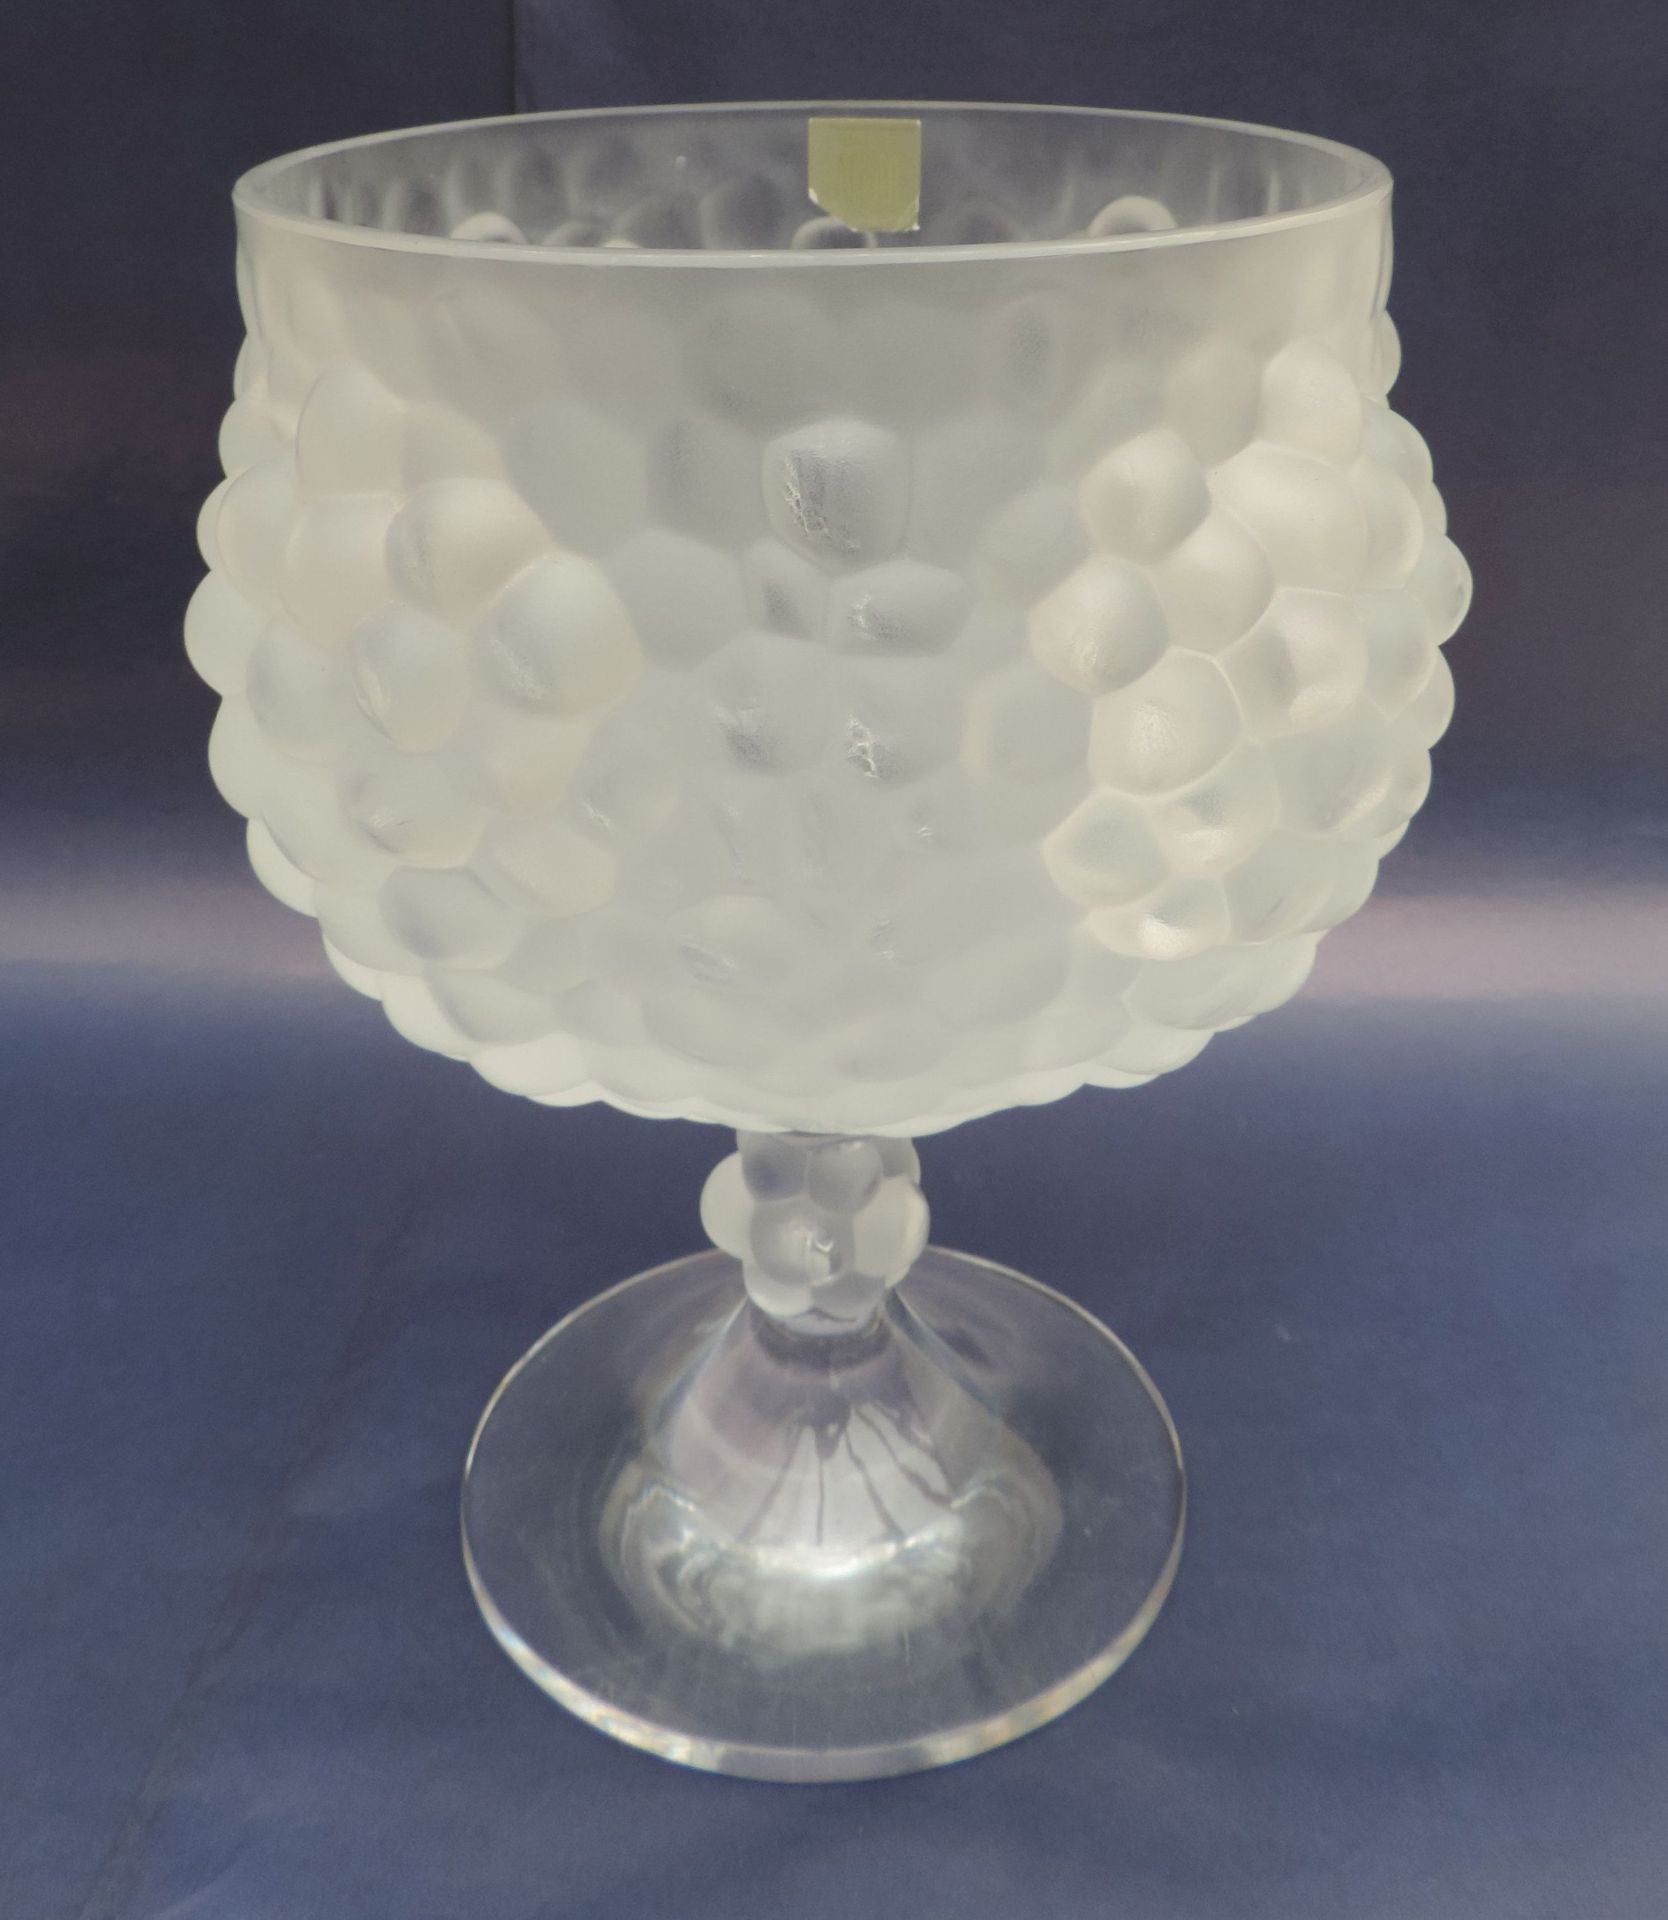 GROSSER POKAL, Manuf René Lalique, Frankreich, Wingen-sur-moder, farbloses Glas, runder Standfuß,